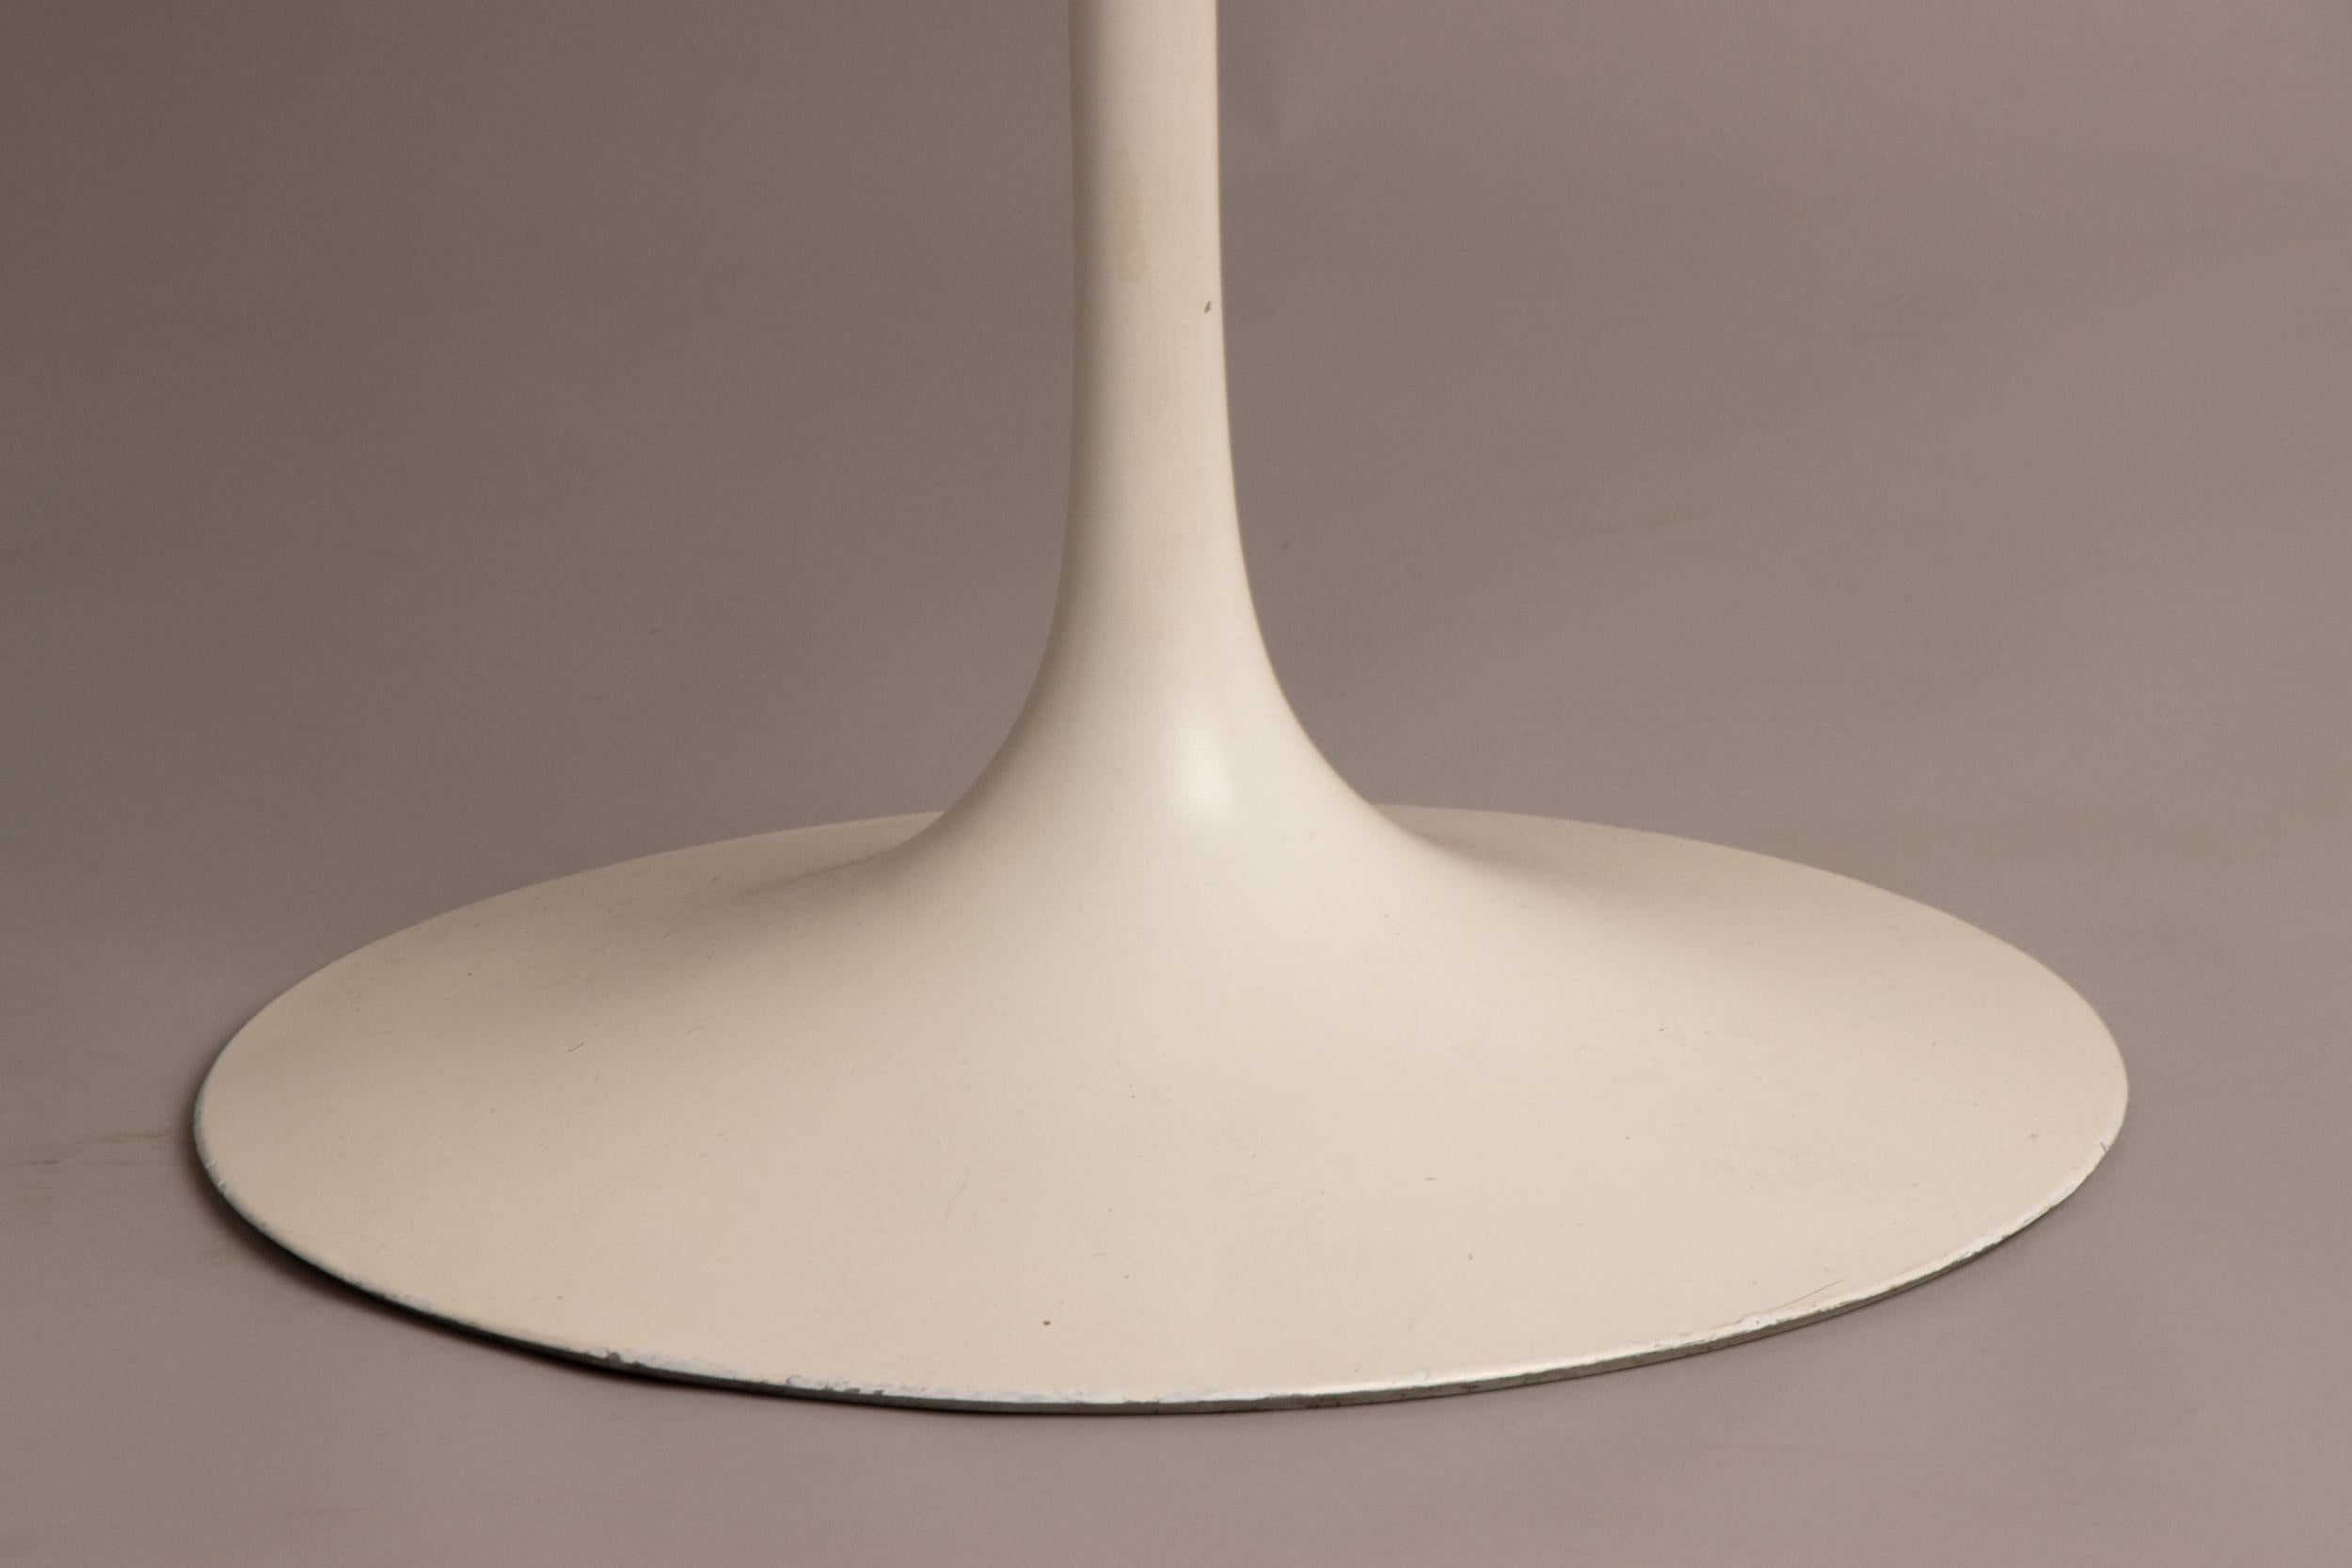 Mid-Century Modern Original Eero Saarinen Tulip Table with Laminate Top by Knoll, c.1960s